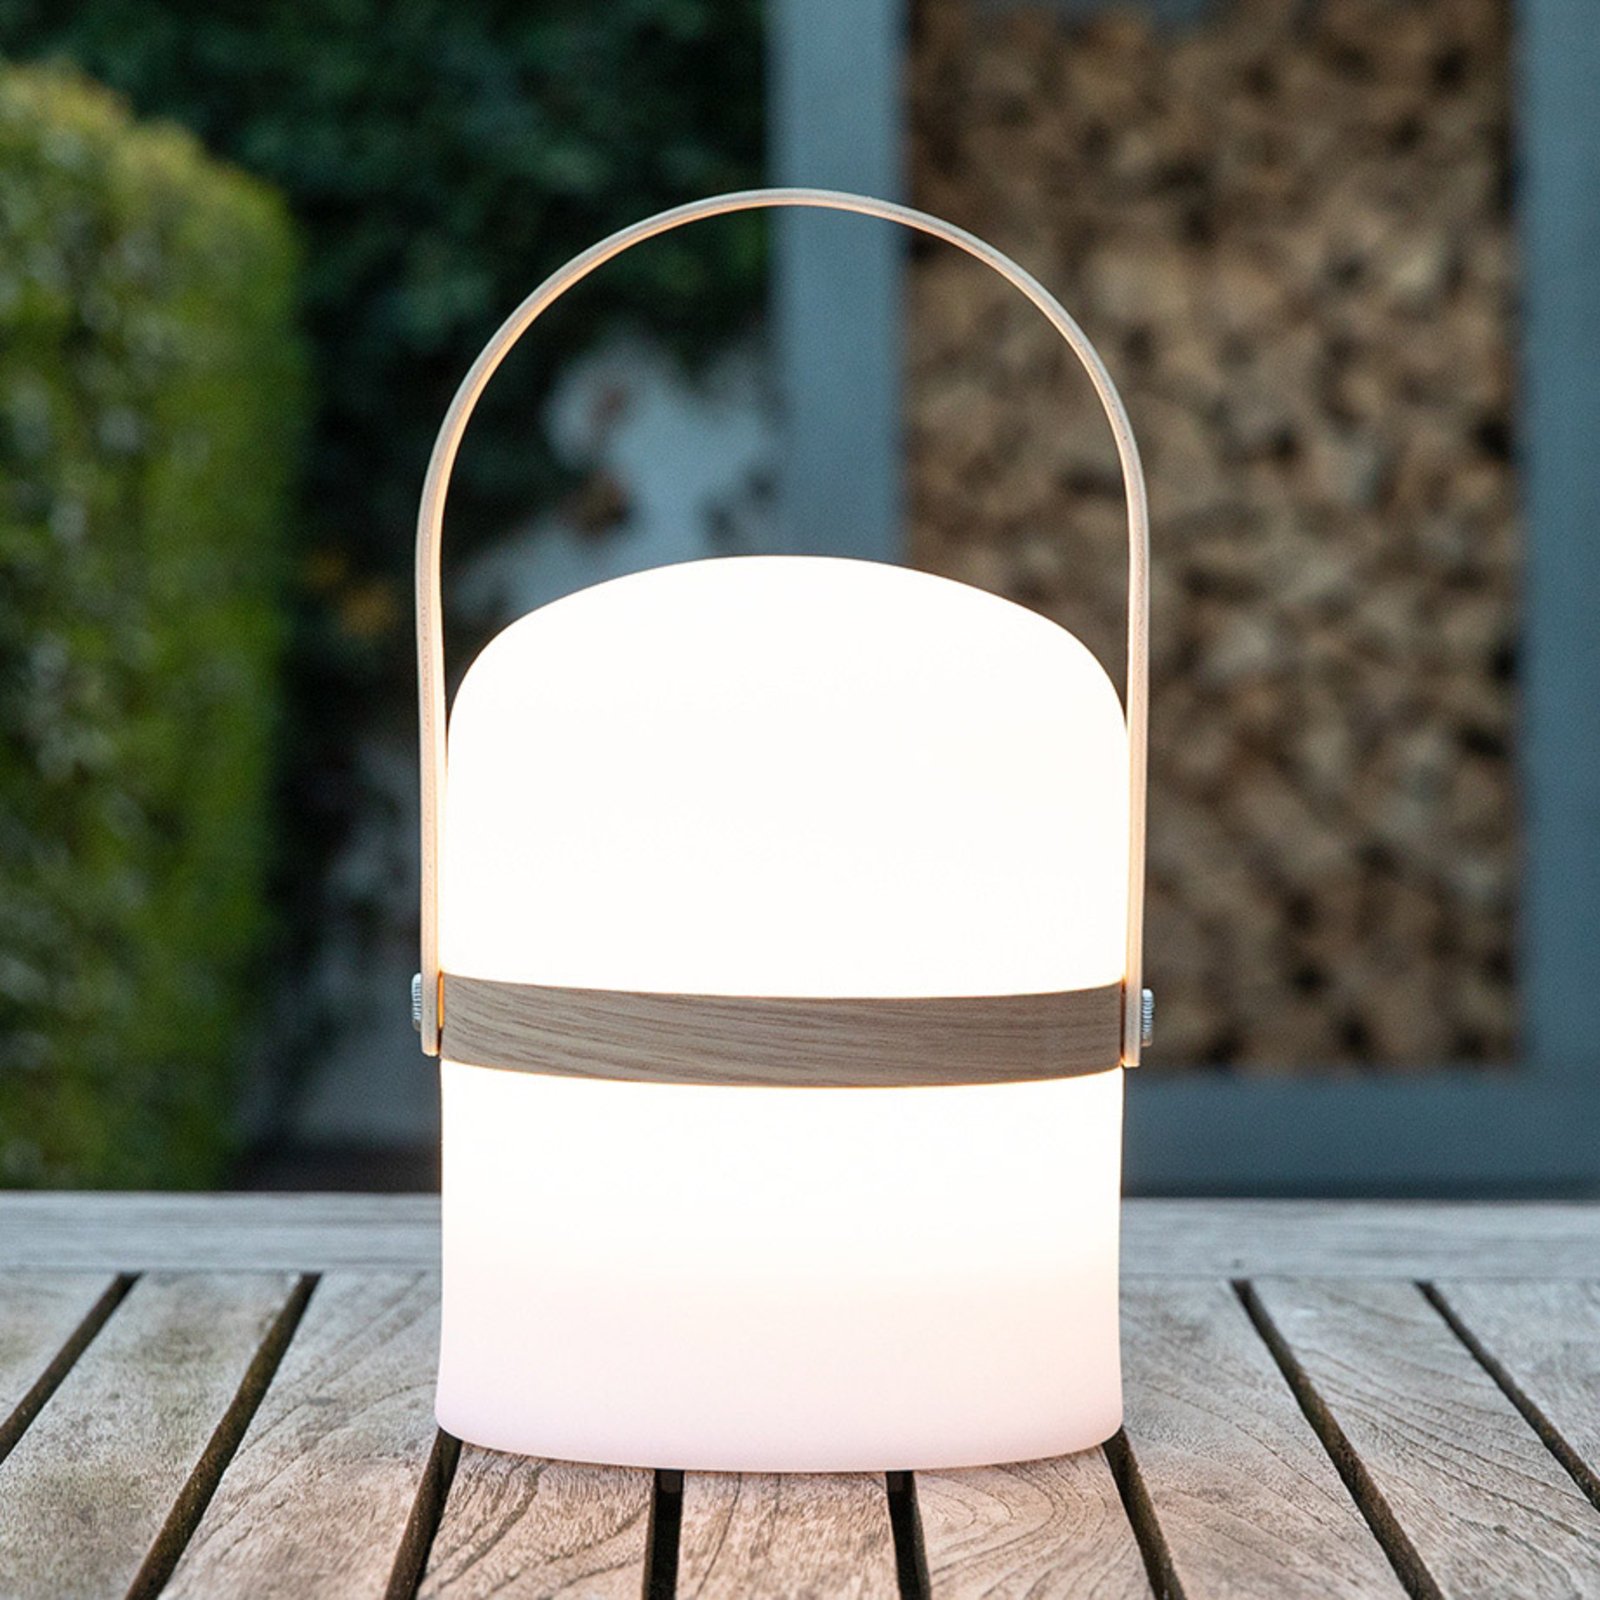 Portable LED table lamp Joe, indoors, outdoors